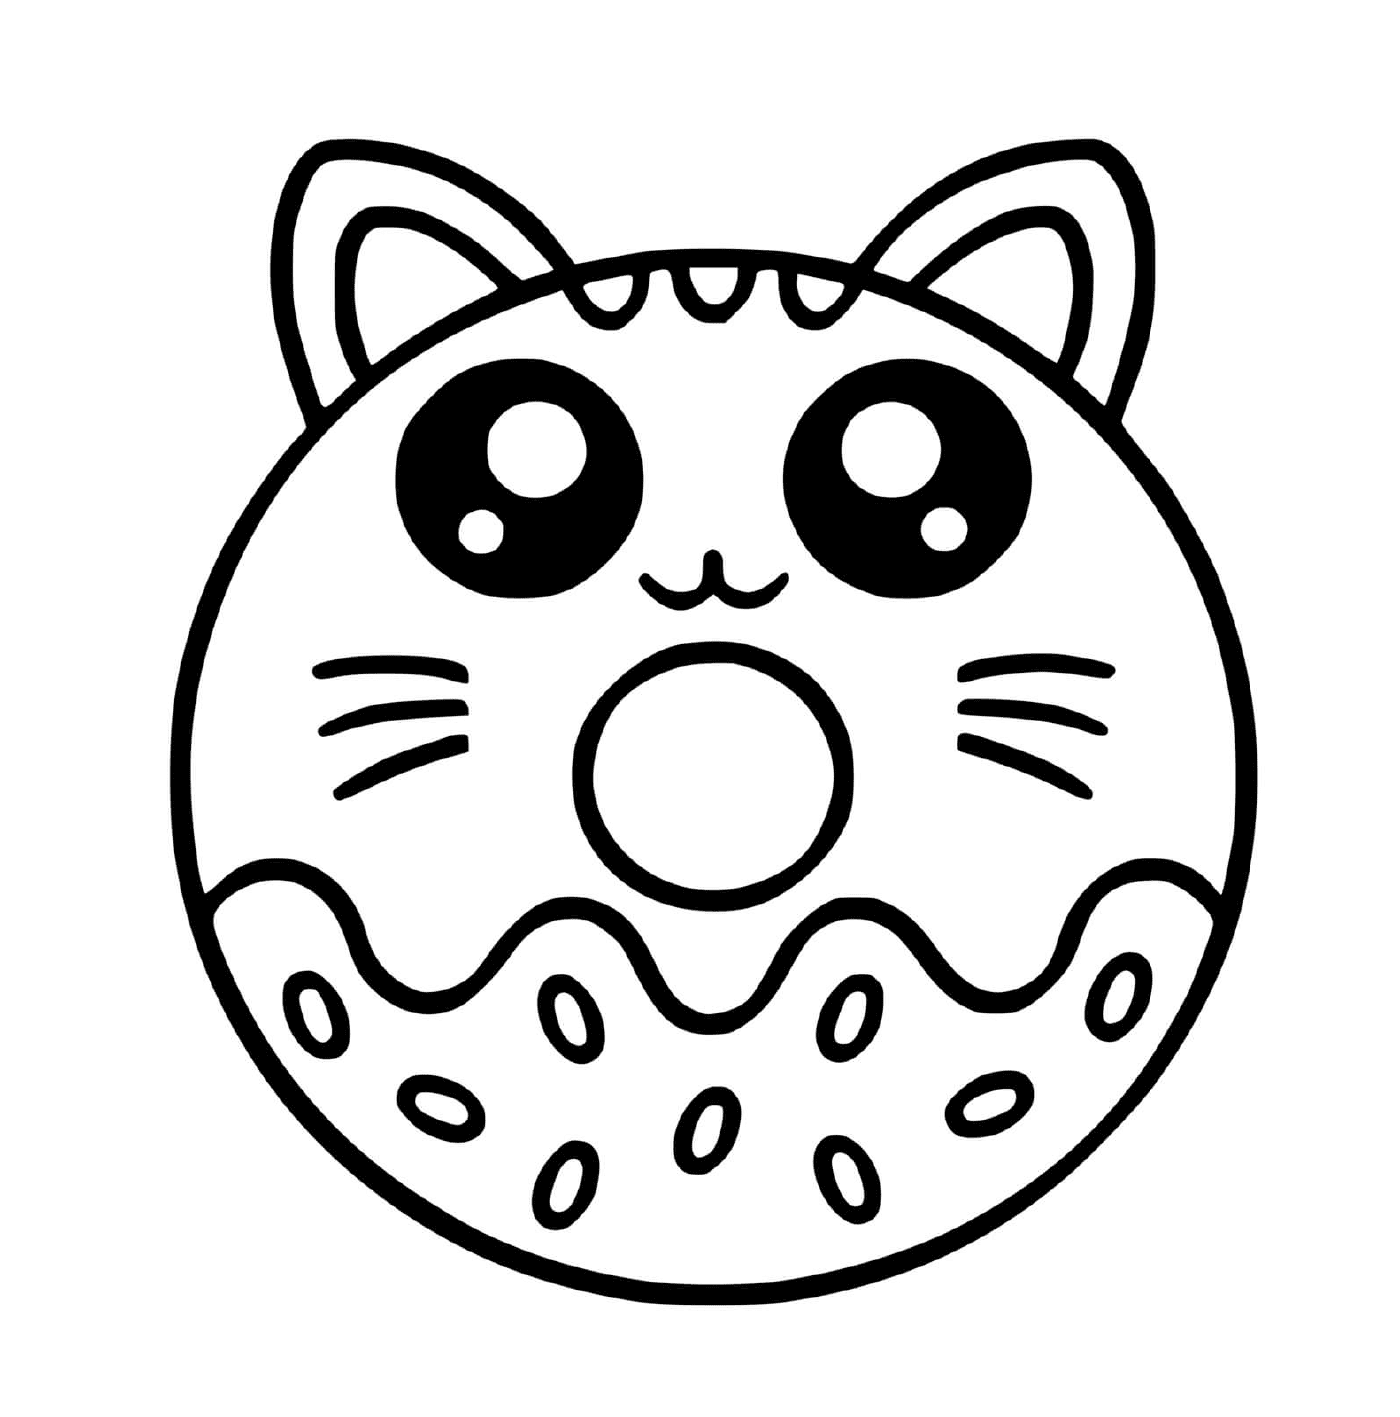  Donut-chat kawaii, cute gourmand 